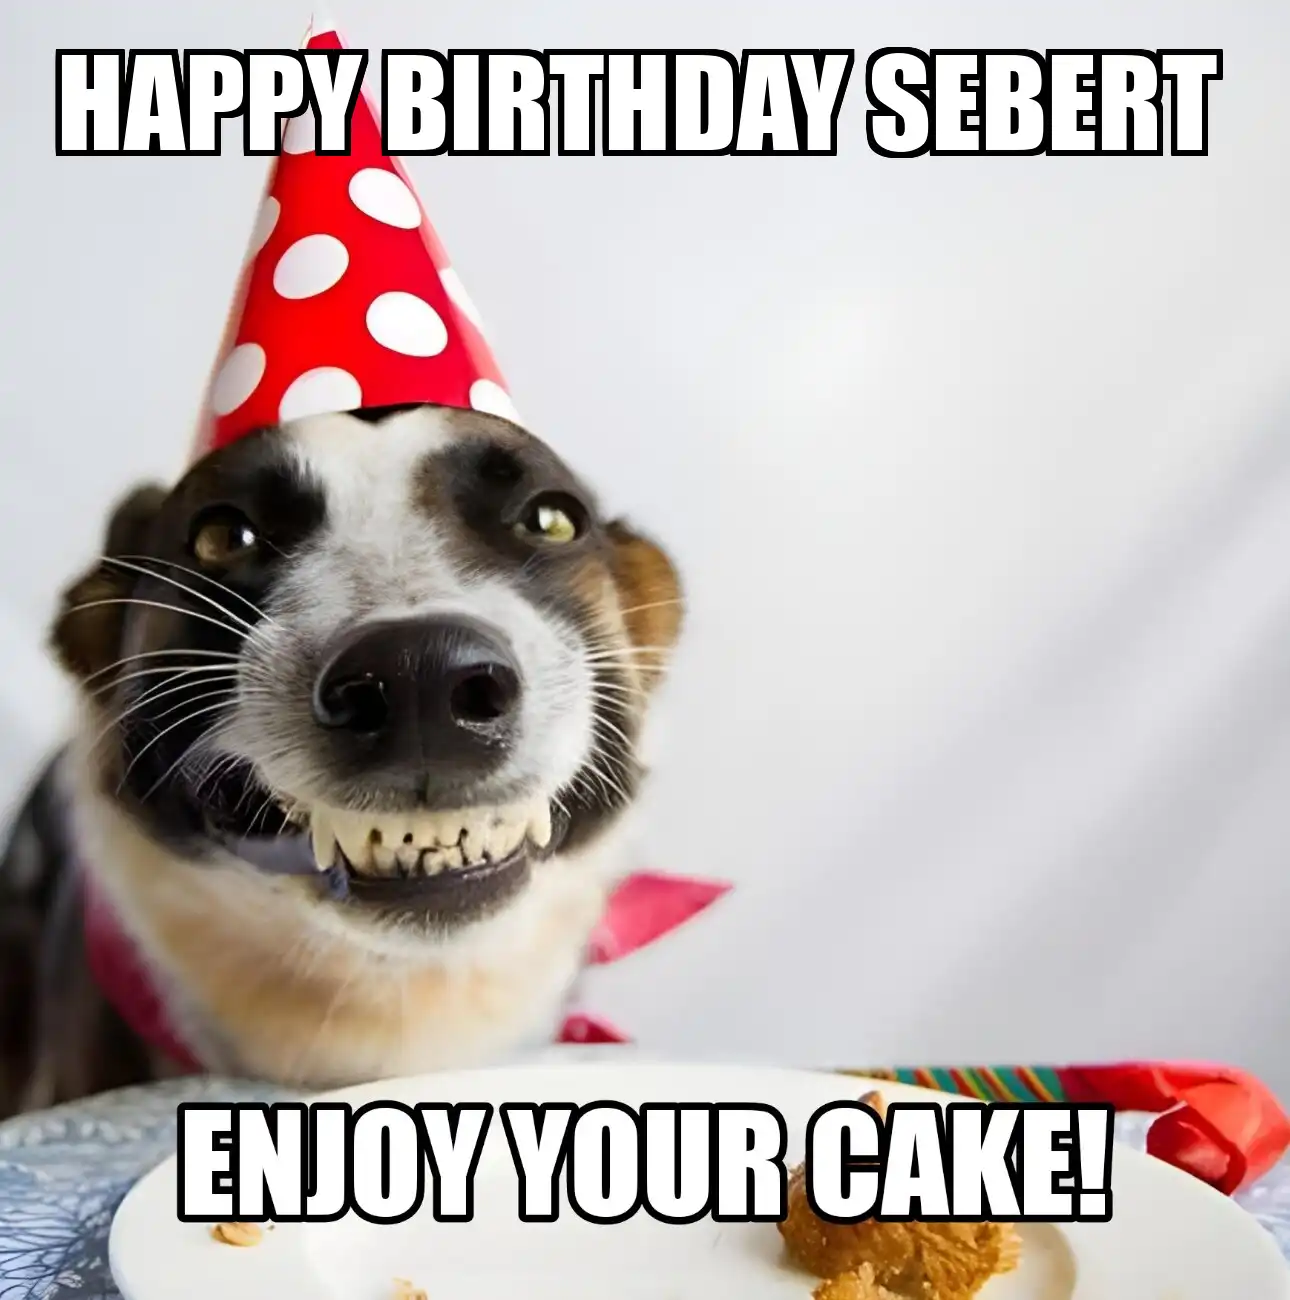 Happy Birthday Sebert Enjoy Your Cake Dog Meme